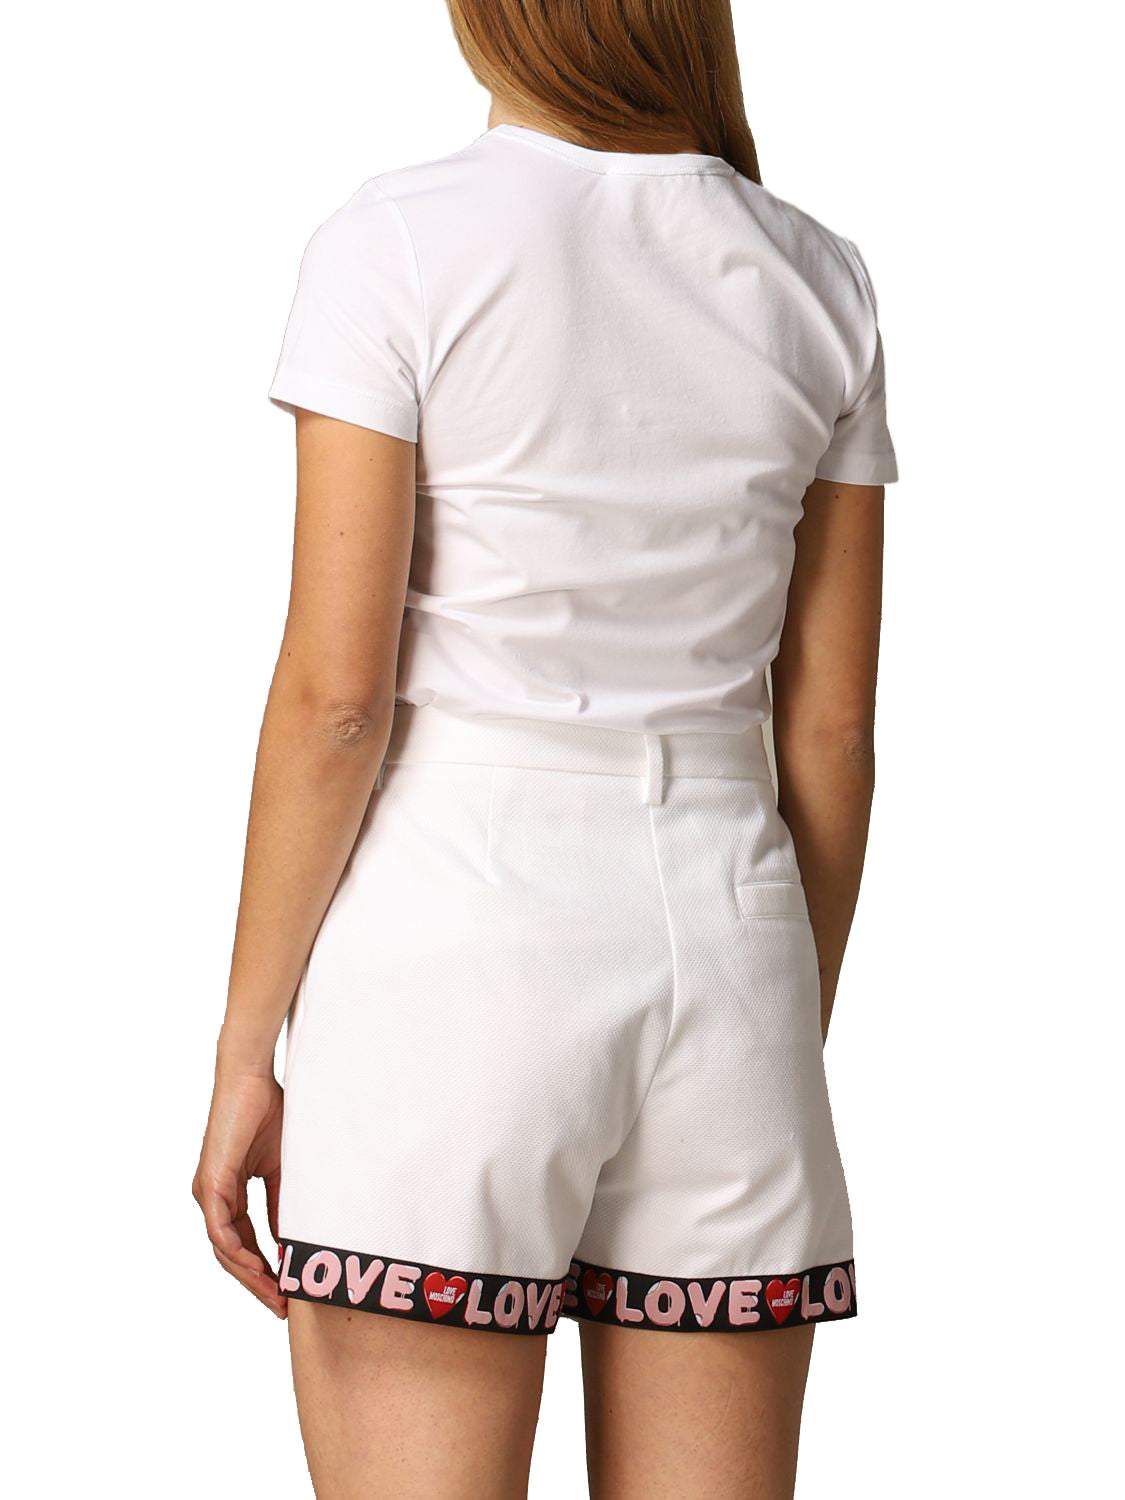 Love Moschino White Cotton Tops & T-Shirt feed-1, IT40|S, IT42|M, IT44|L, Love Moschino, Tops & T-Shirts - Women - Clothing, White at SEYMAYKA